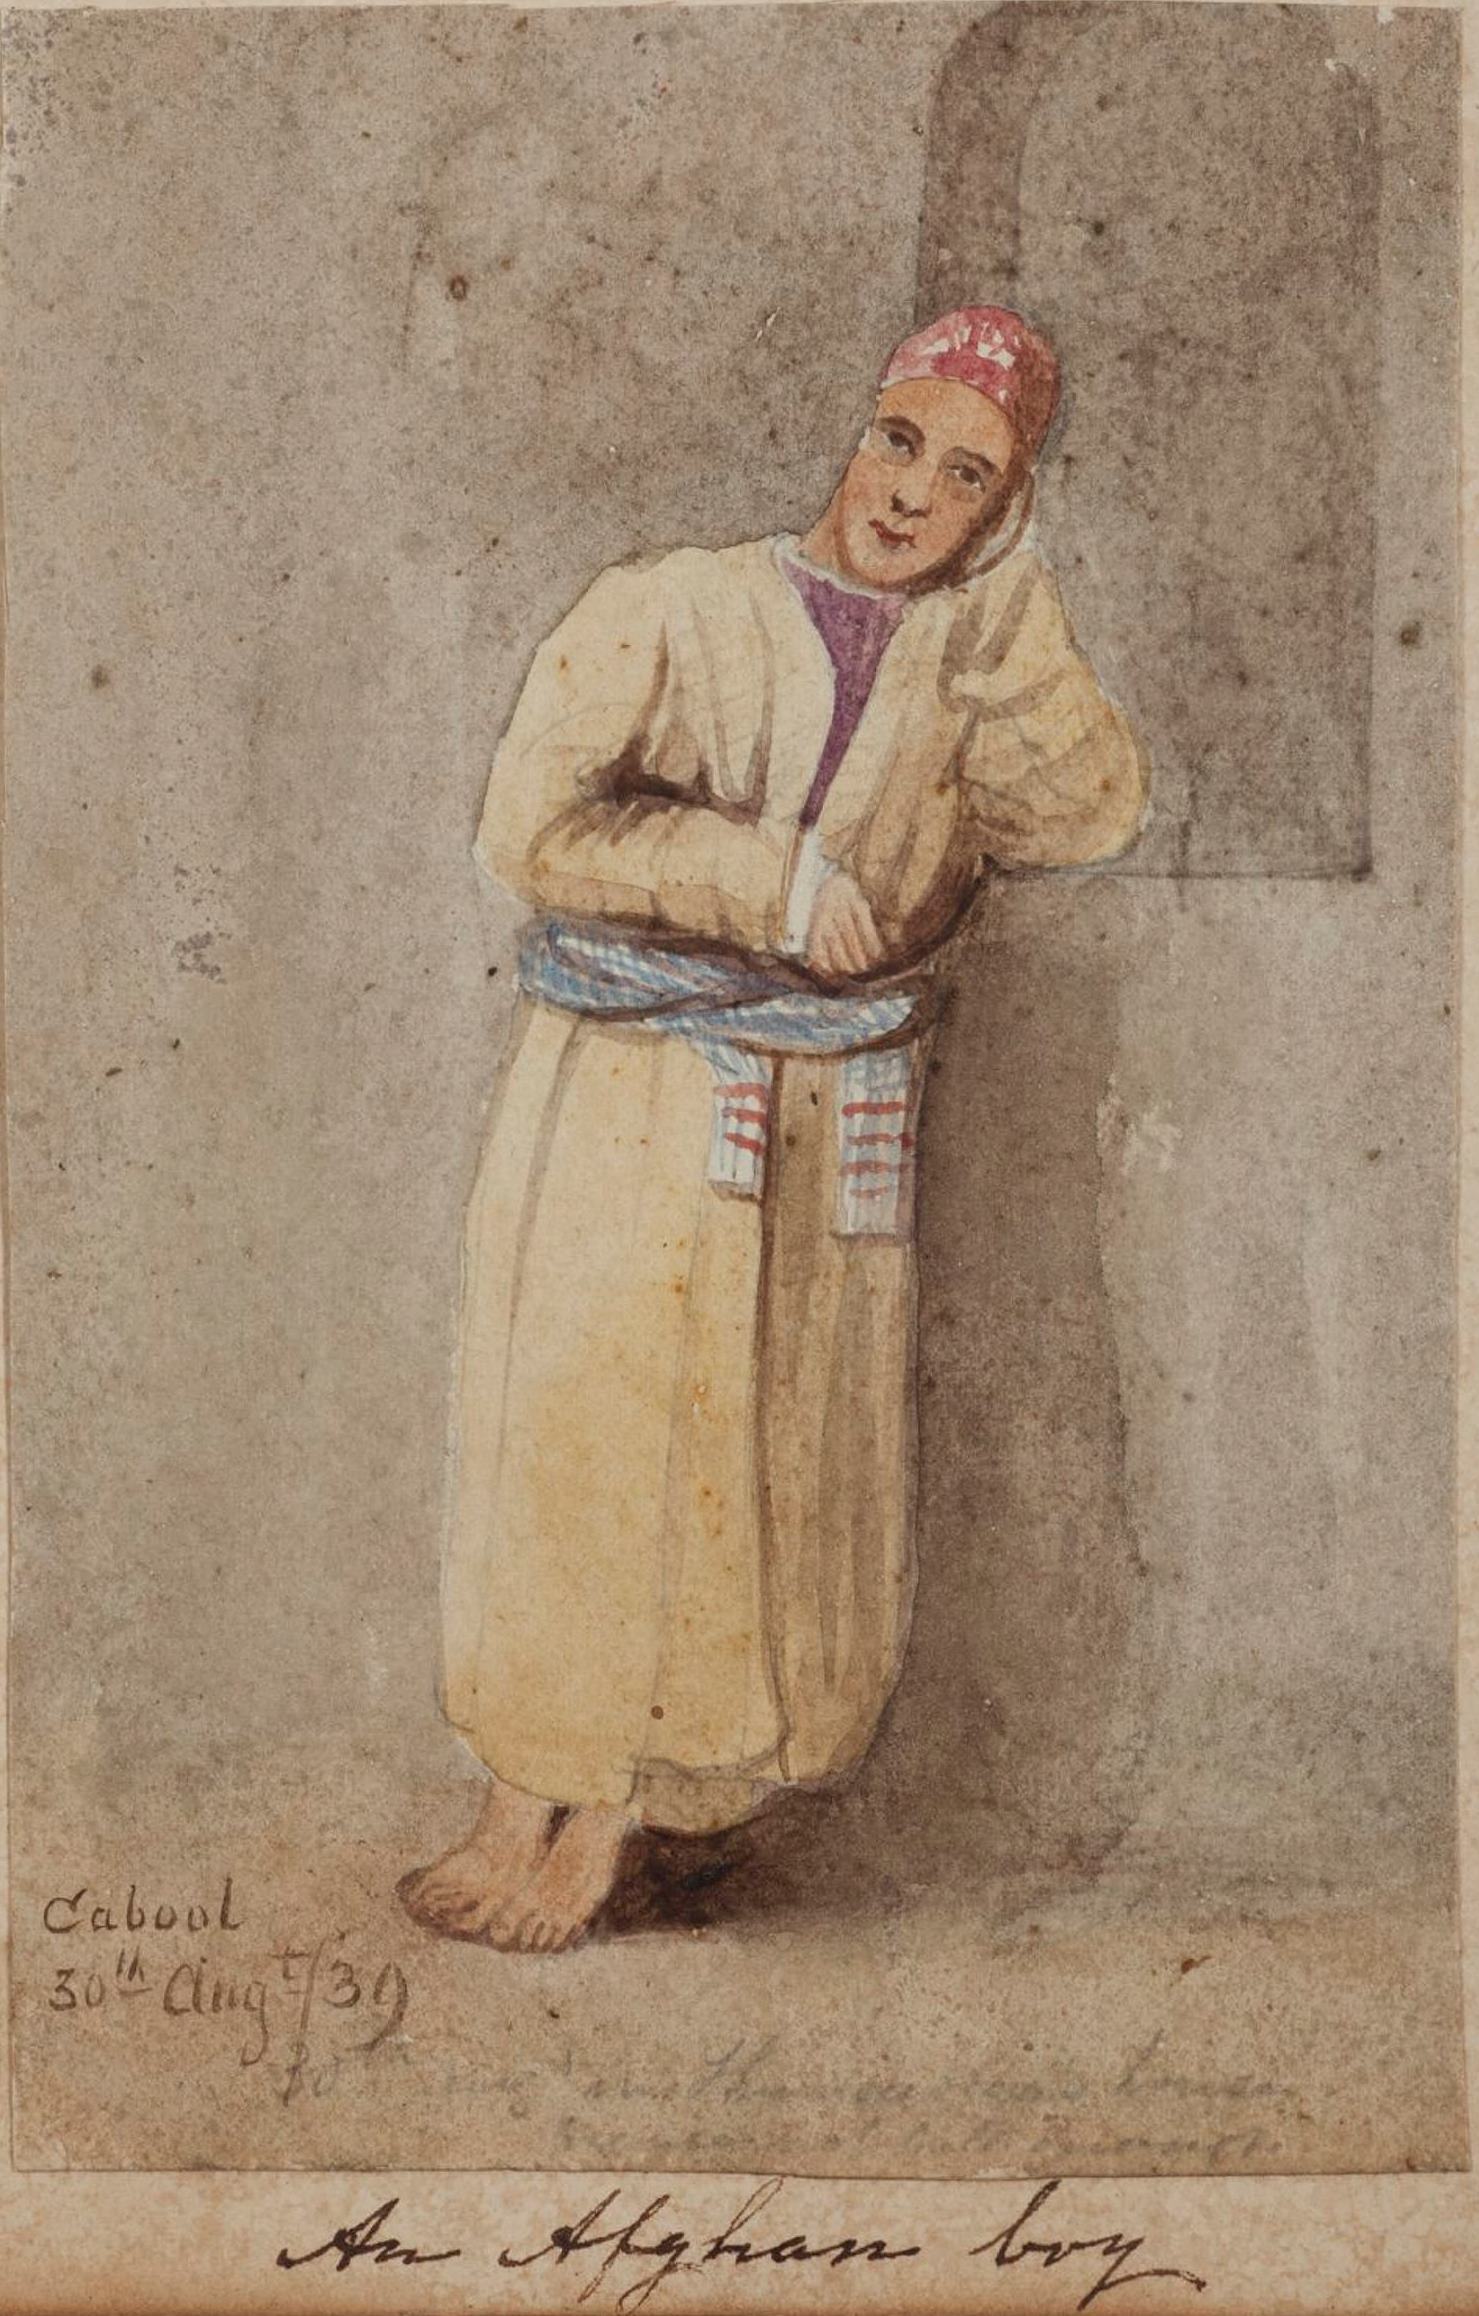 An Afghan boy, Cabool, 30th August 1839 / Thomas Wingate